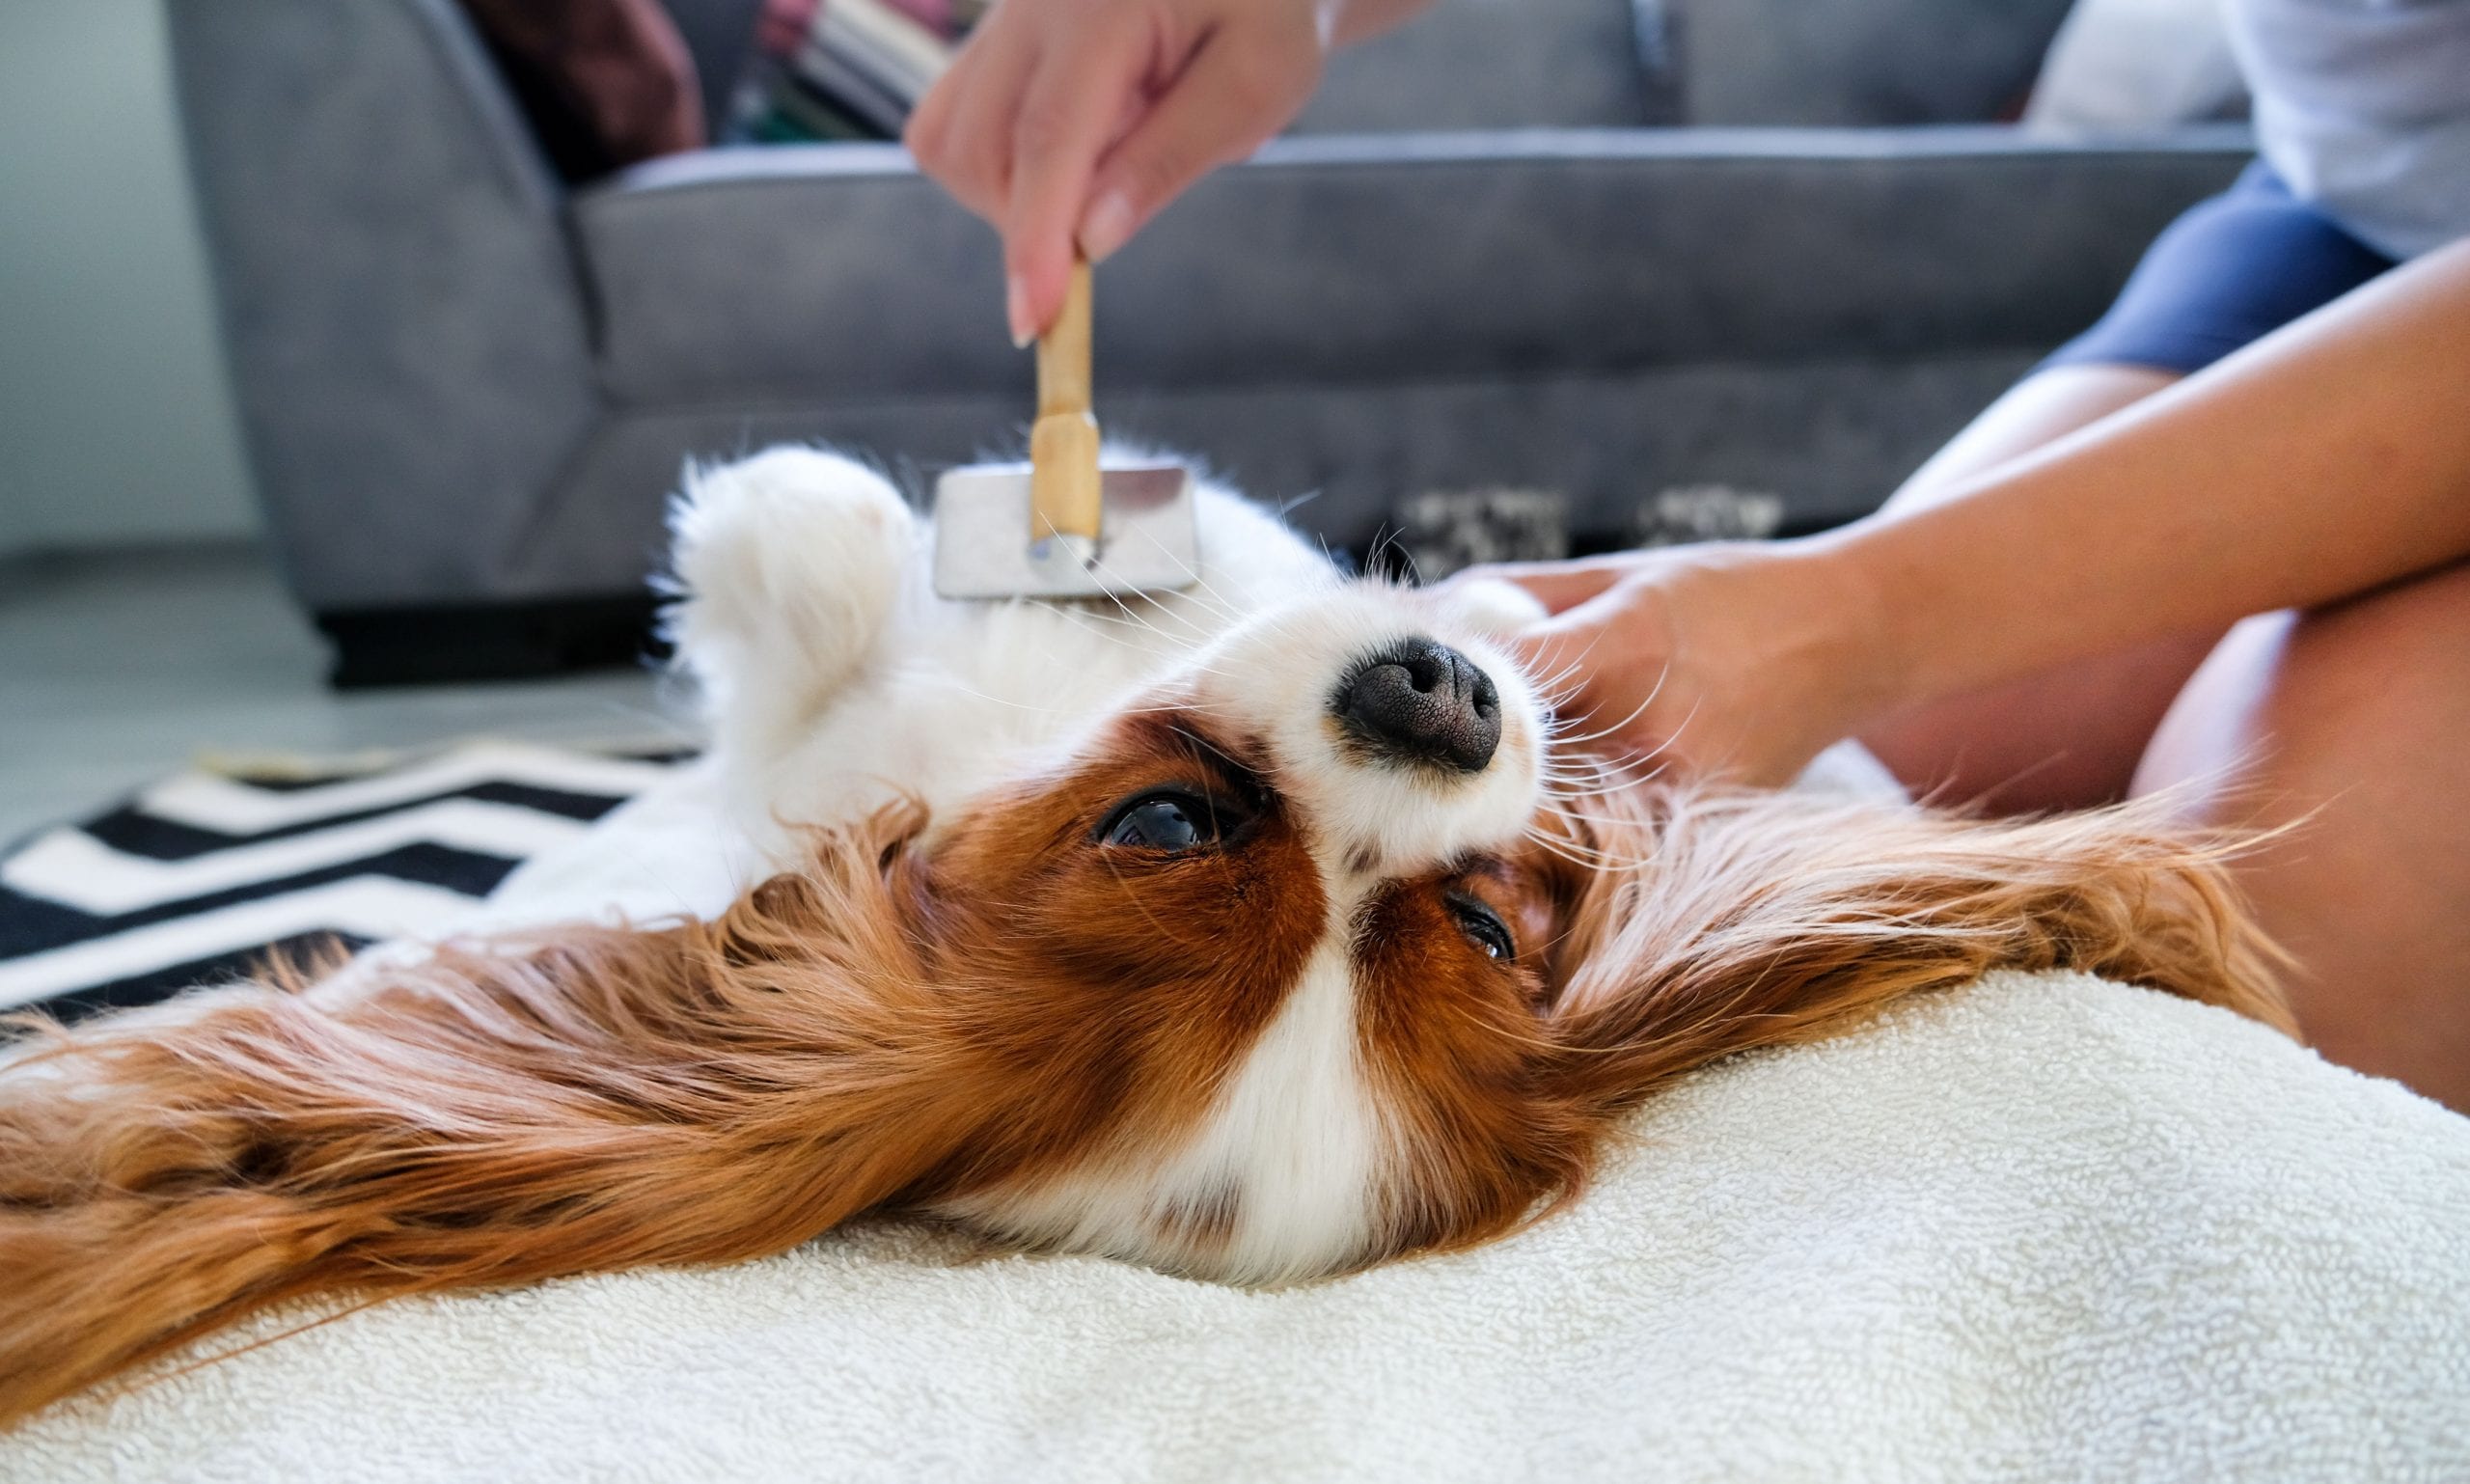 dog grooming: brush dog regularly